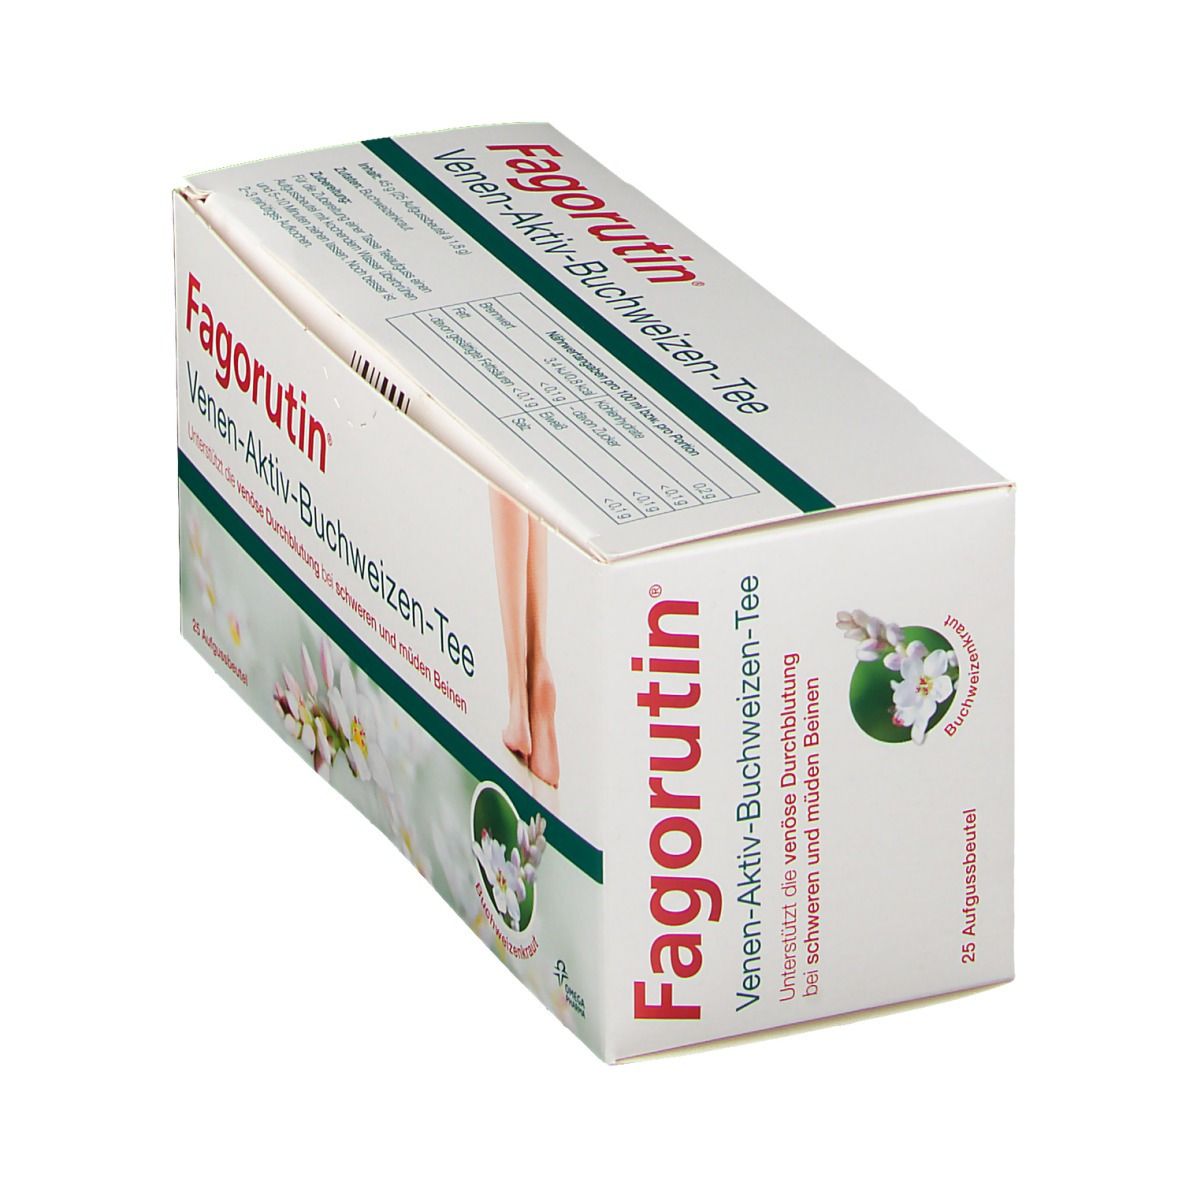 Fagorutin® Venen Aktiv Buchweizen-Tee